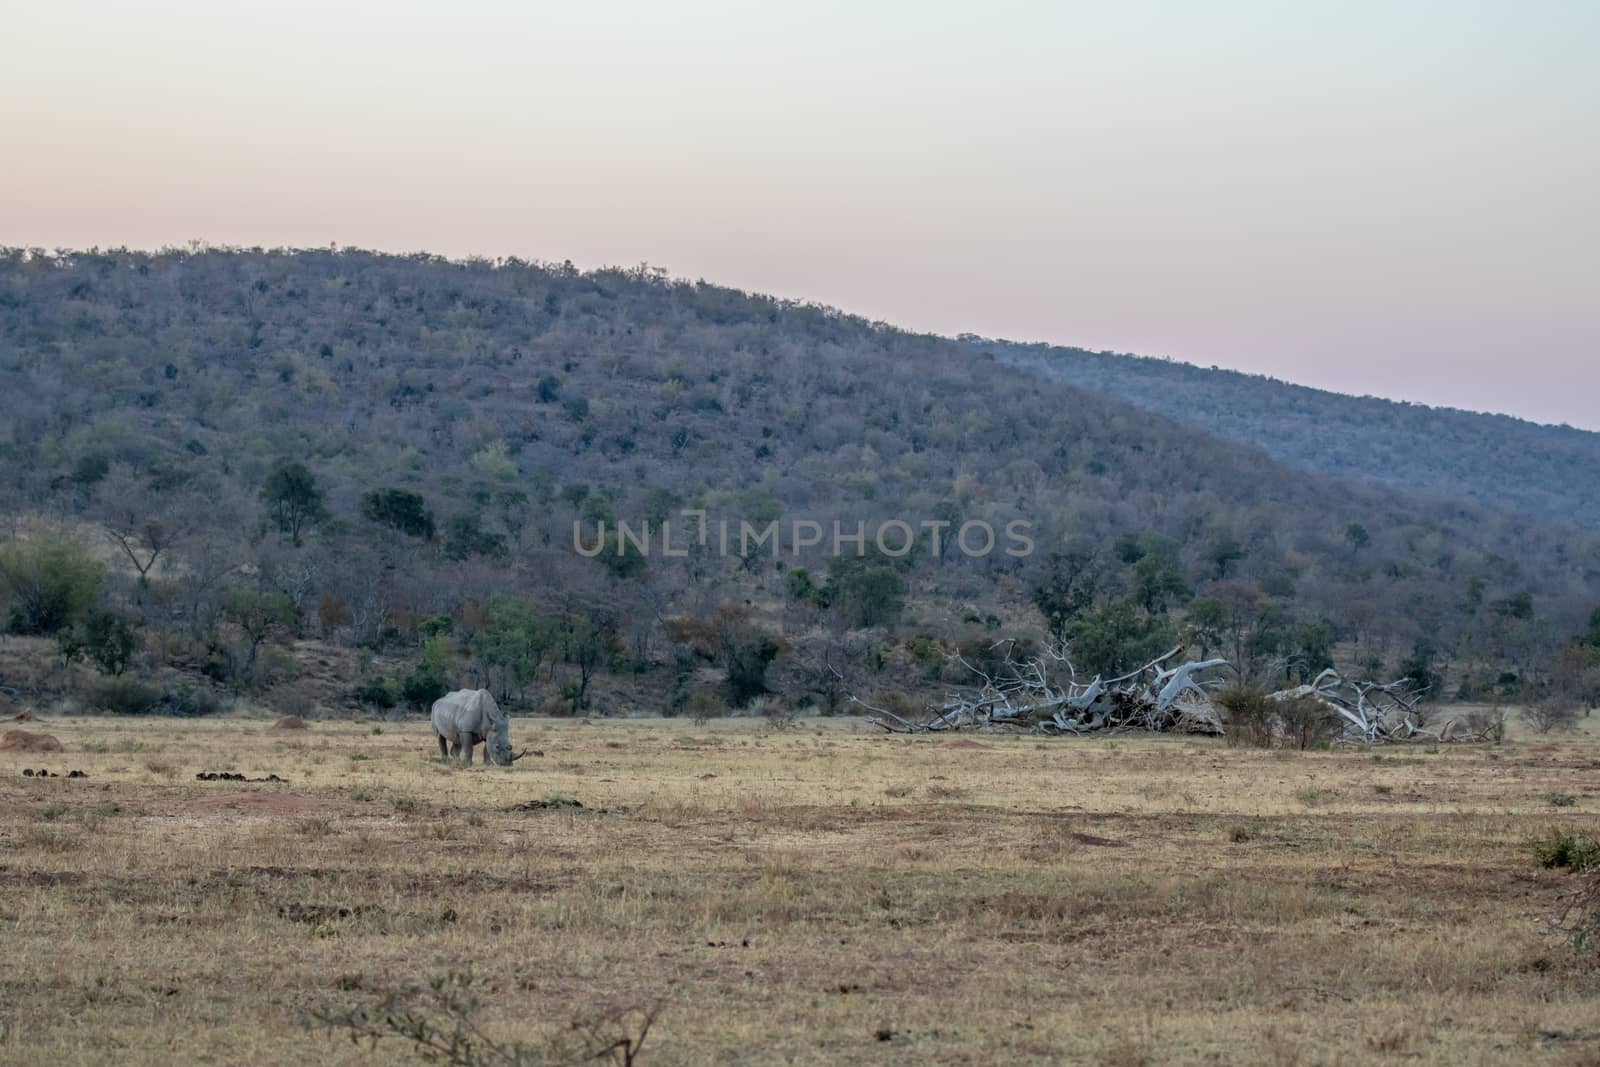 White rhino grazing in an open plain, South Africa.